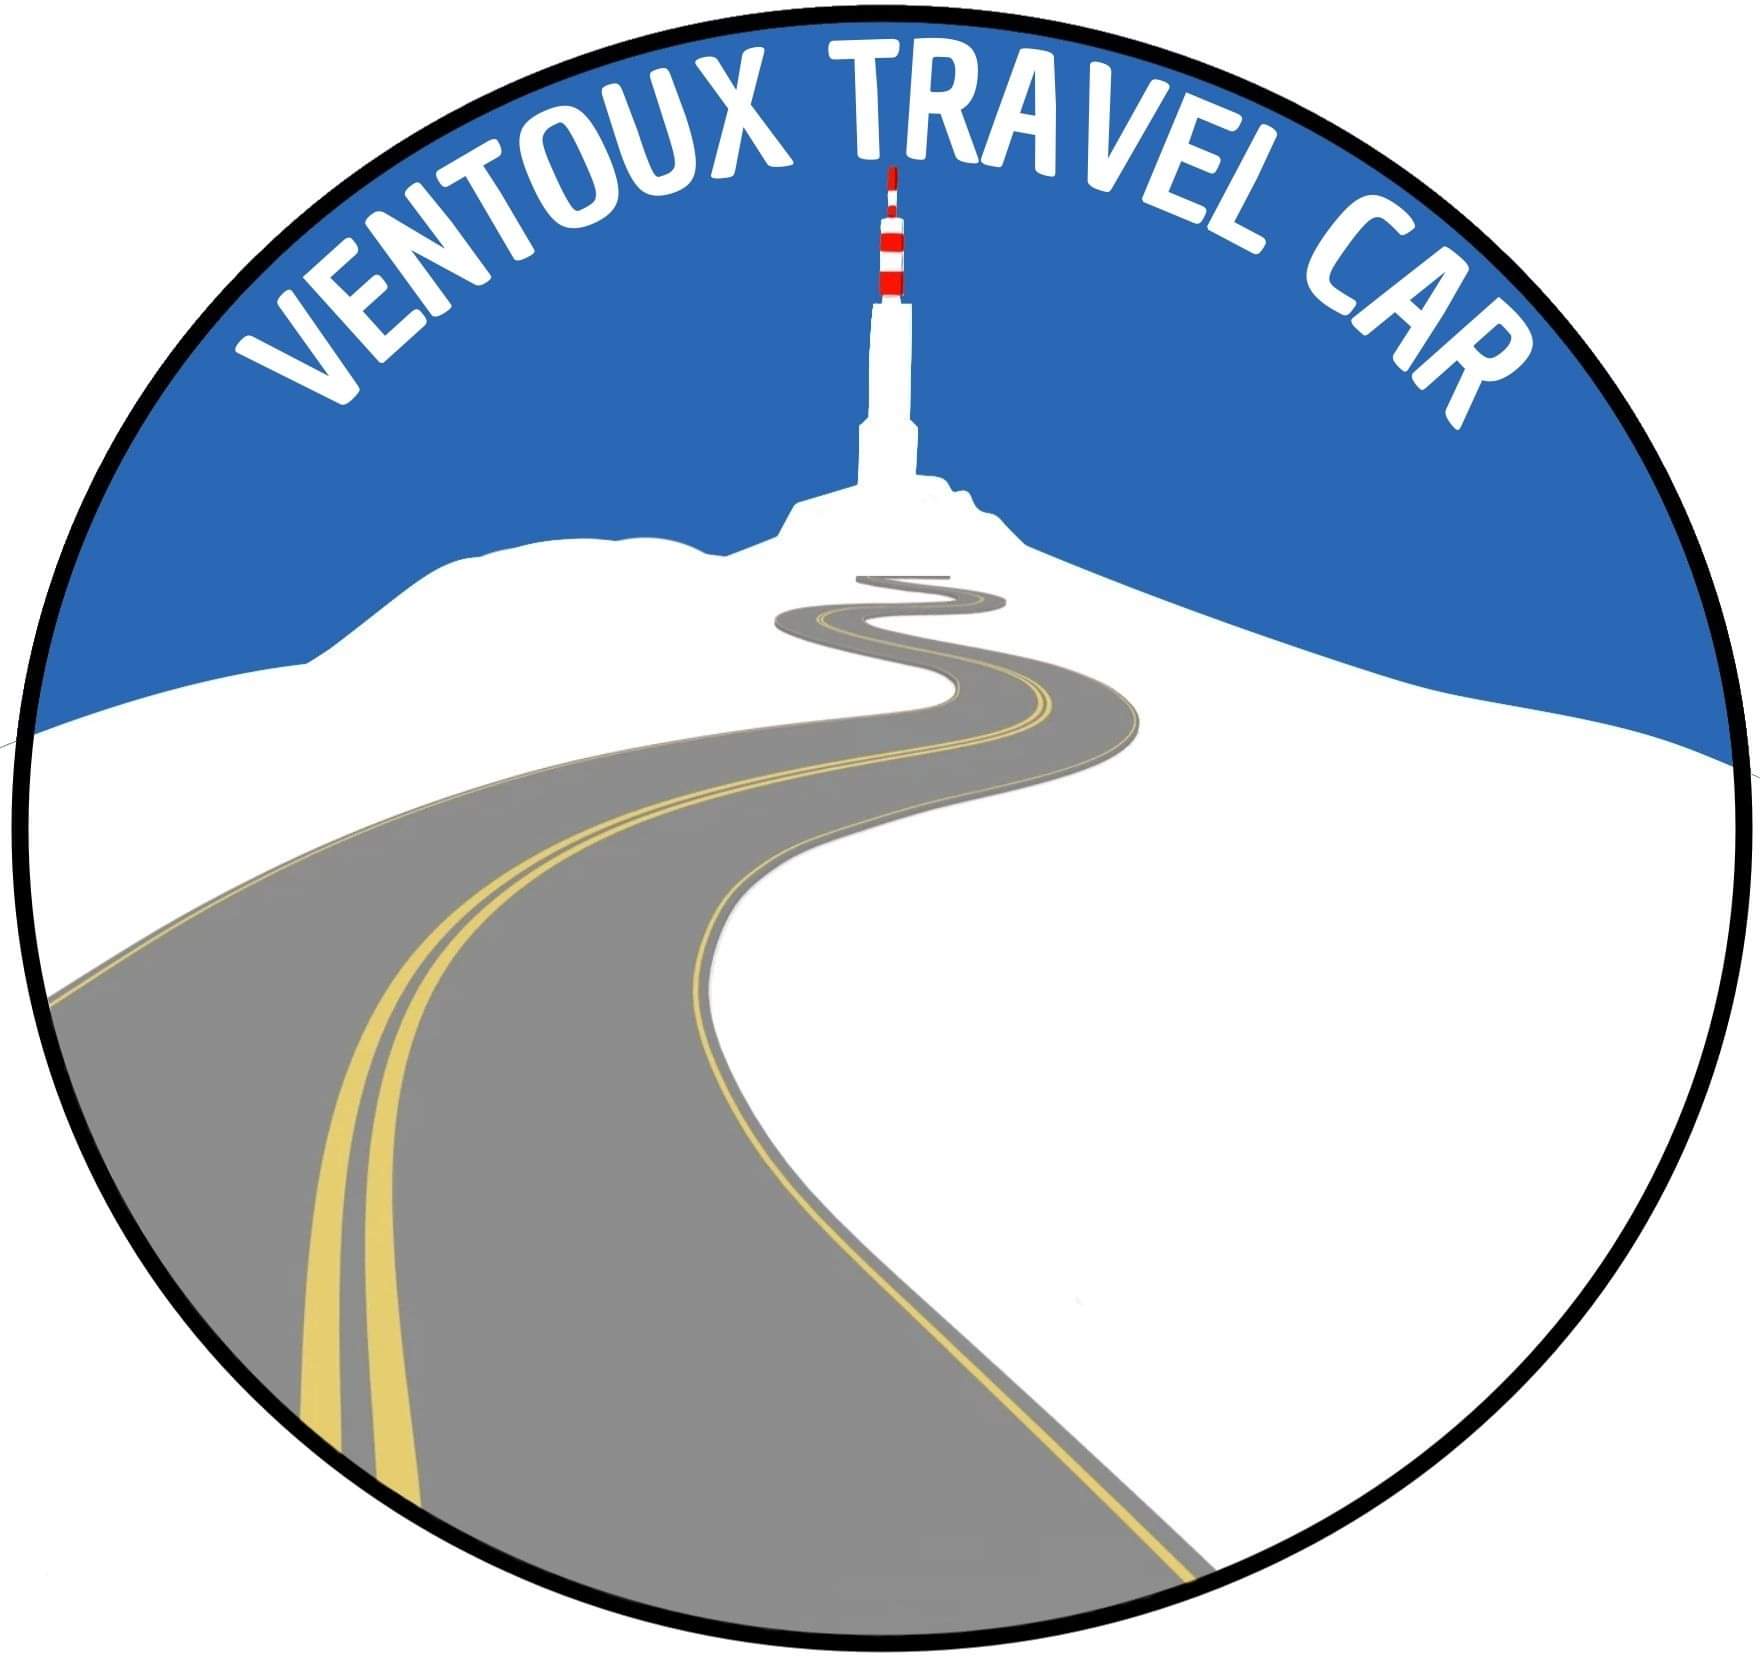 Ventoux Travel Car